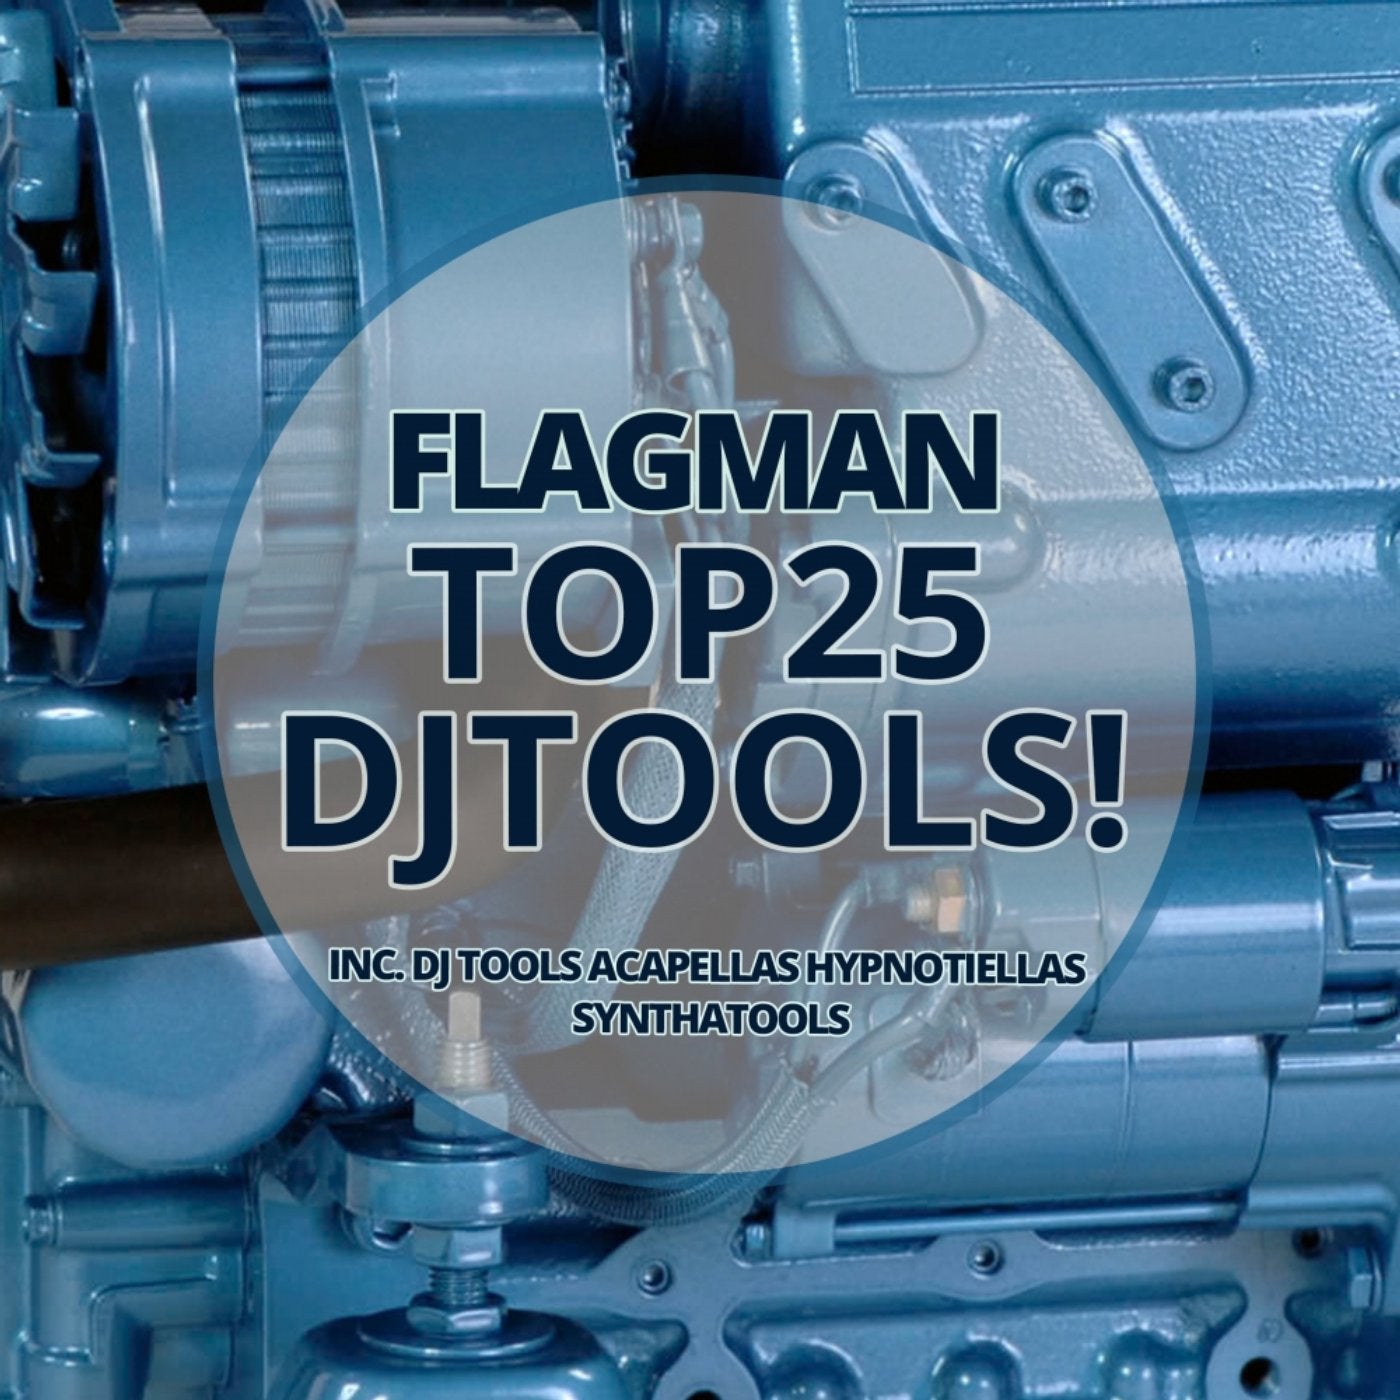 Flagman Top25 DJ Tools!